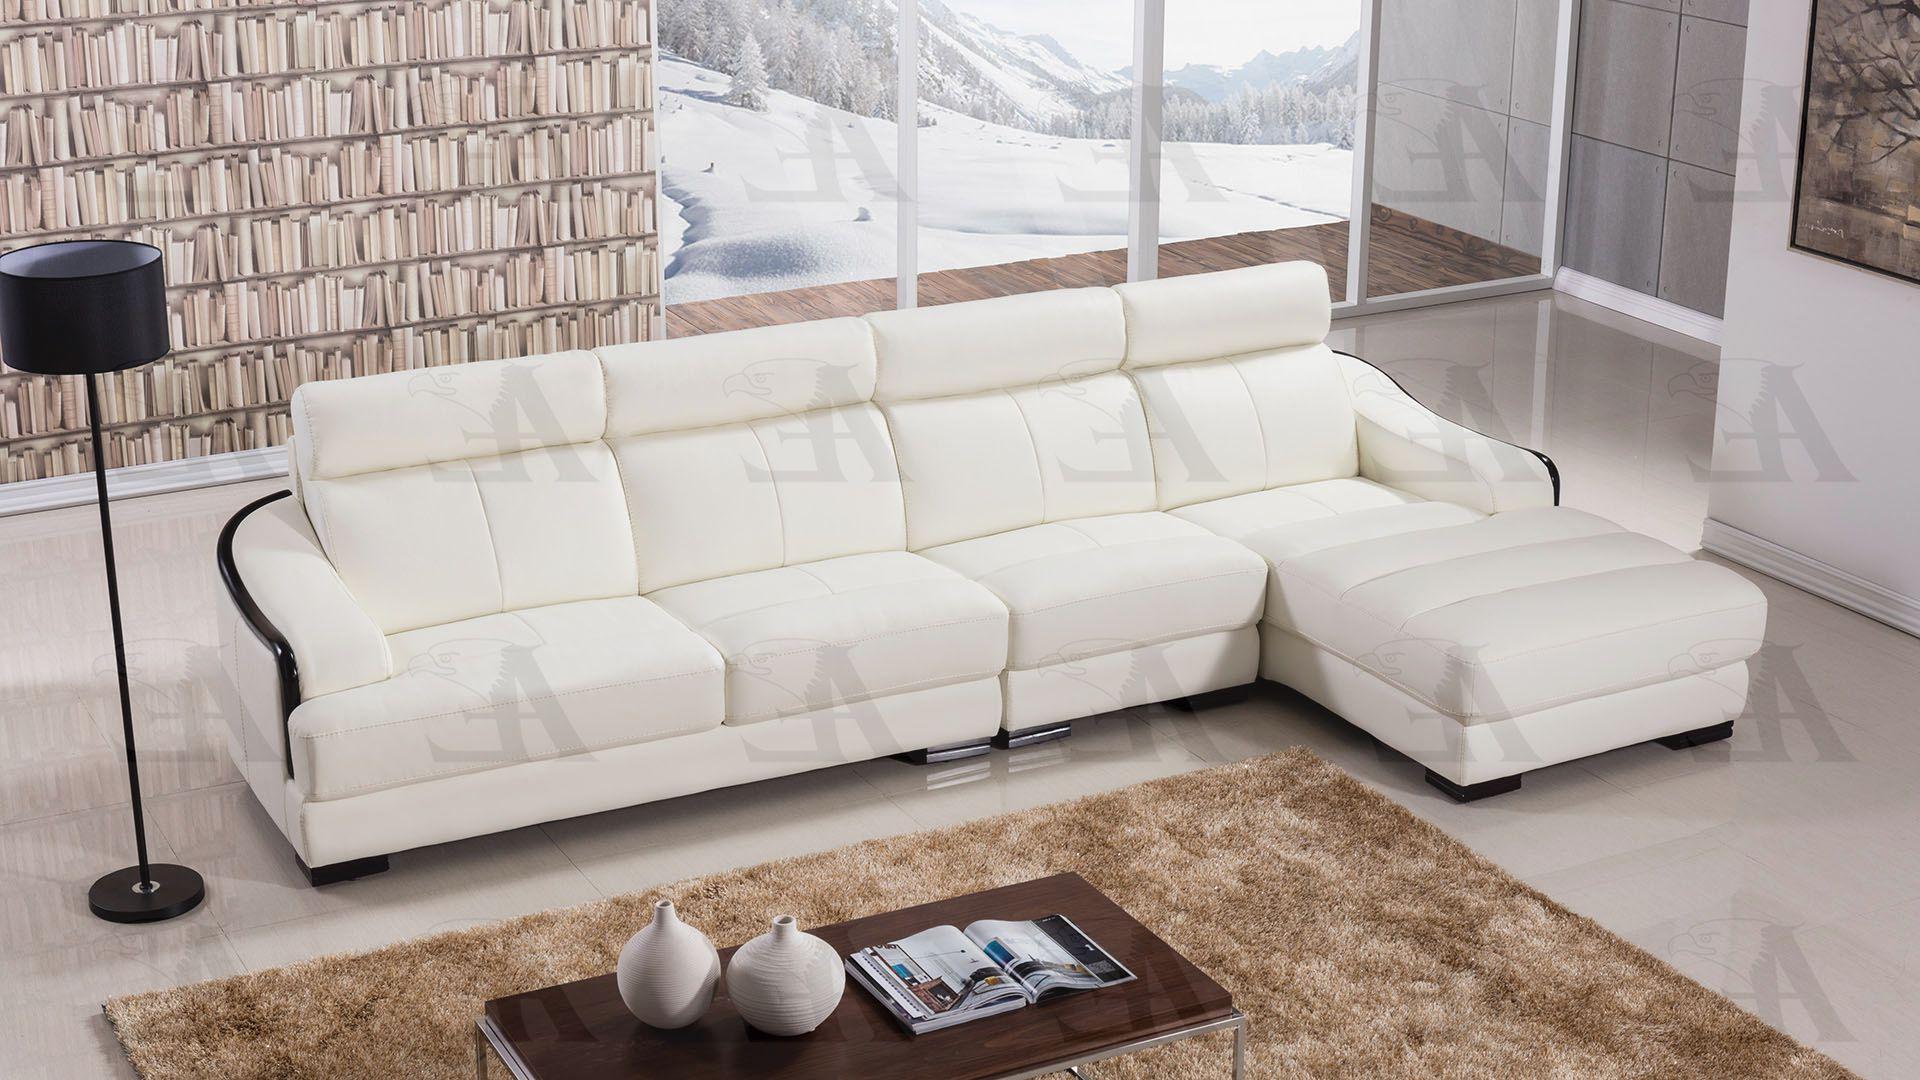 

    
American Eagle Furniture EK-LB310-W Modern White Genuine Leather Sectional RHC 3 Pcs
